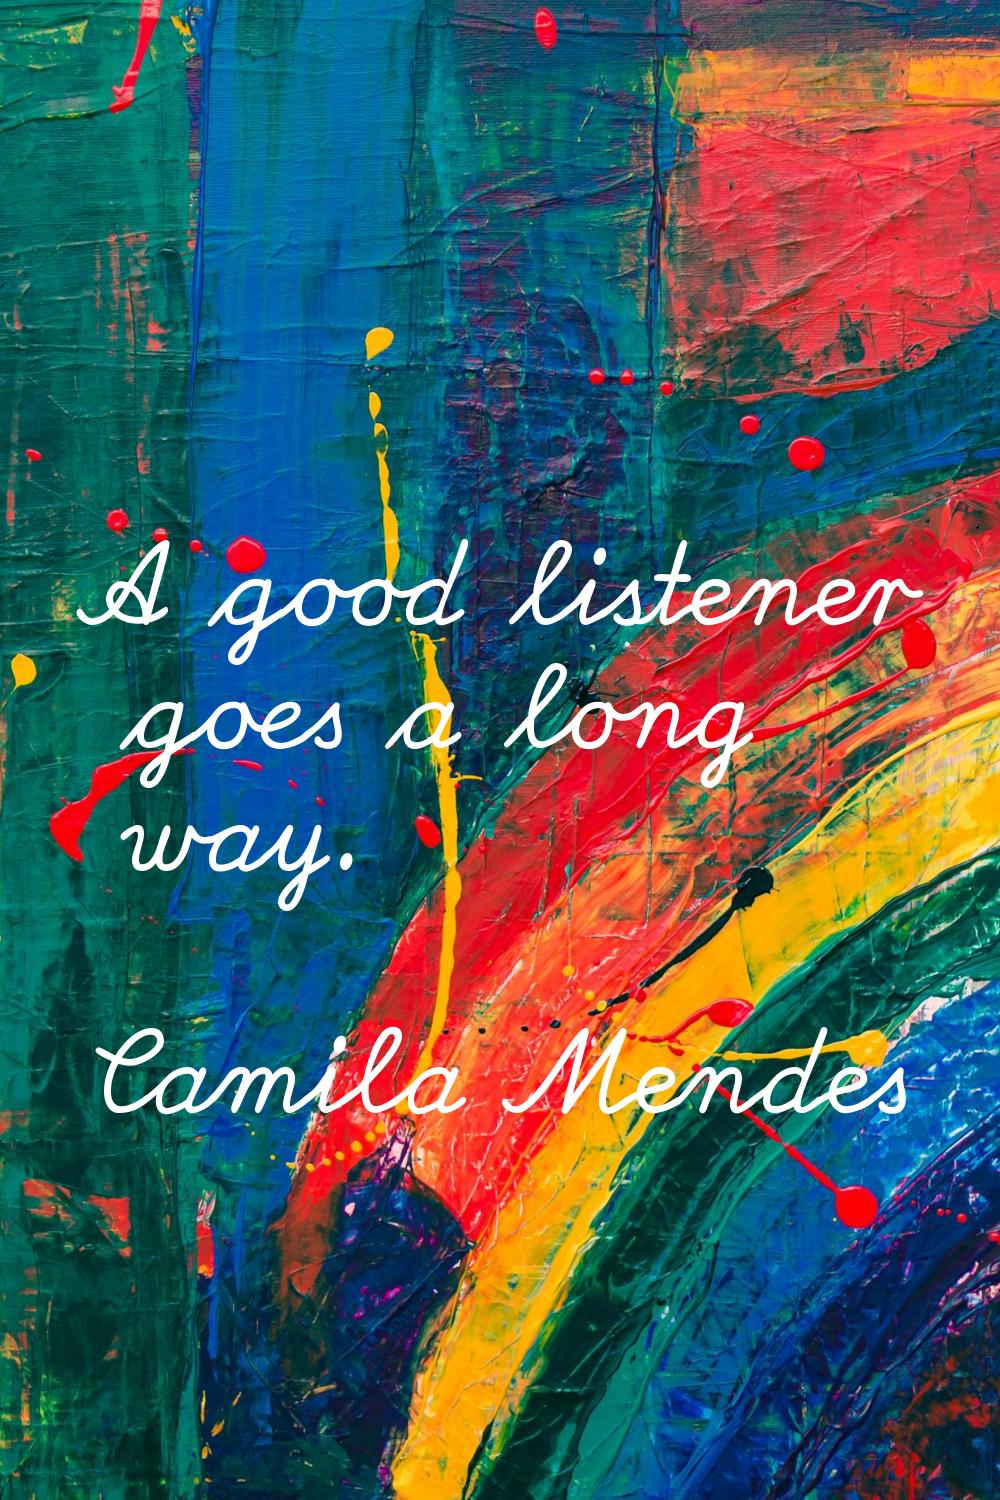 A good listener goes a long way.